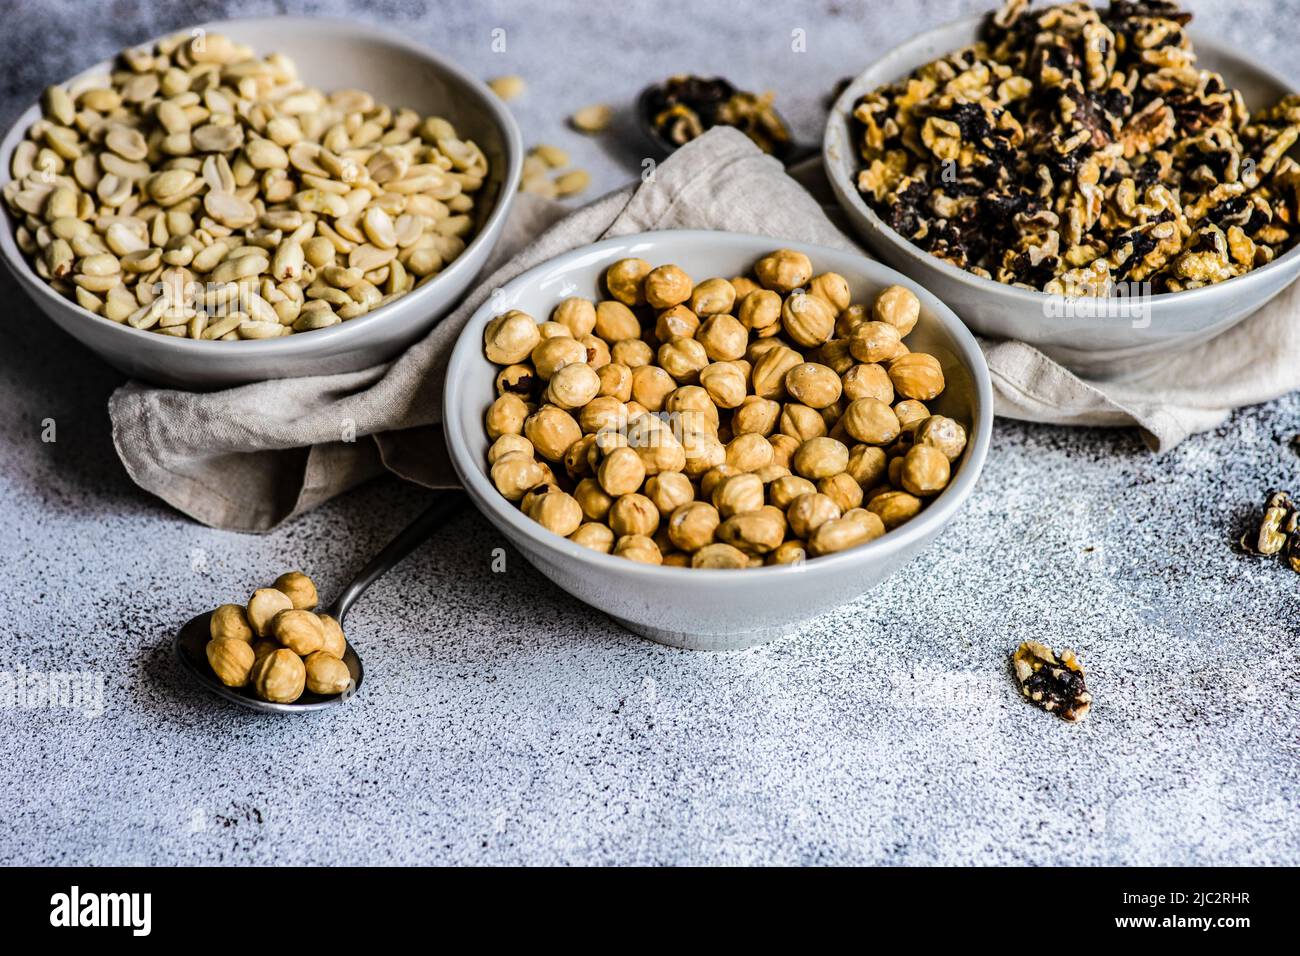 Close-Up of three bowls of hazelnuts, walnuts and peanuts Stock Photo